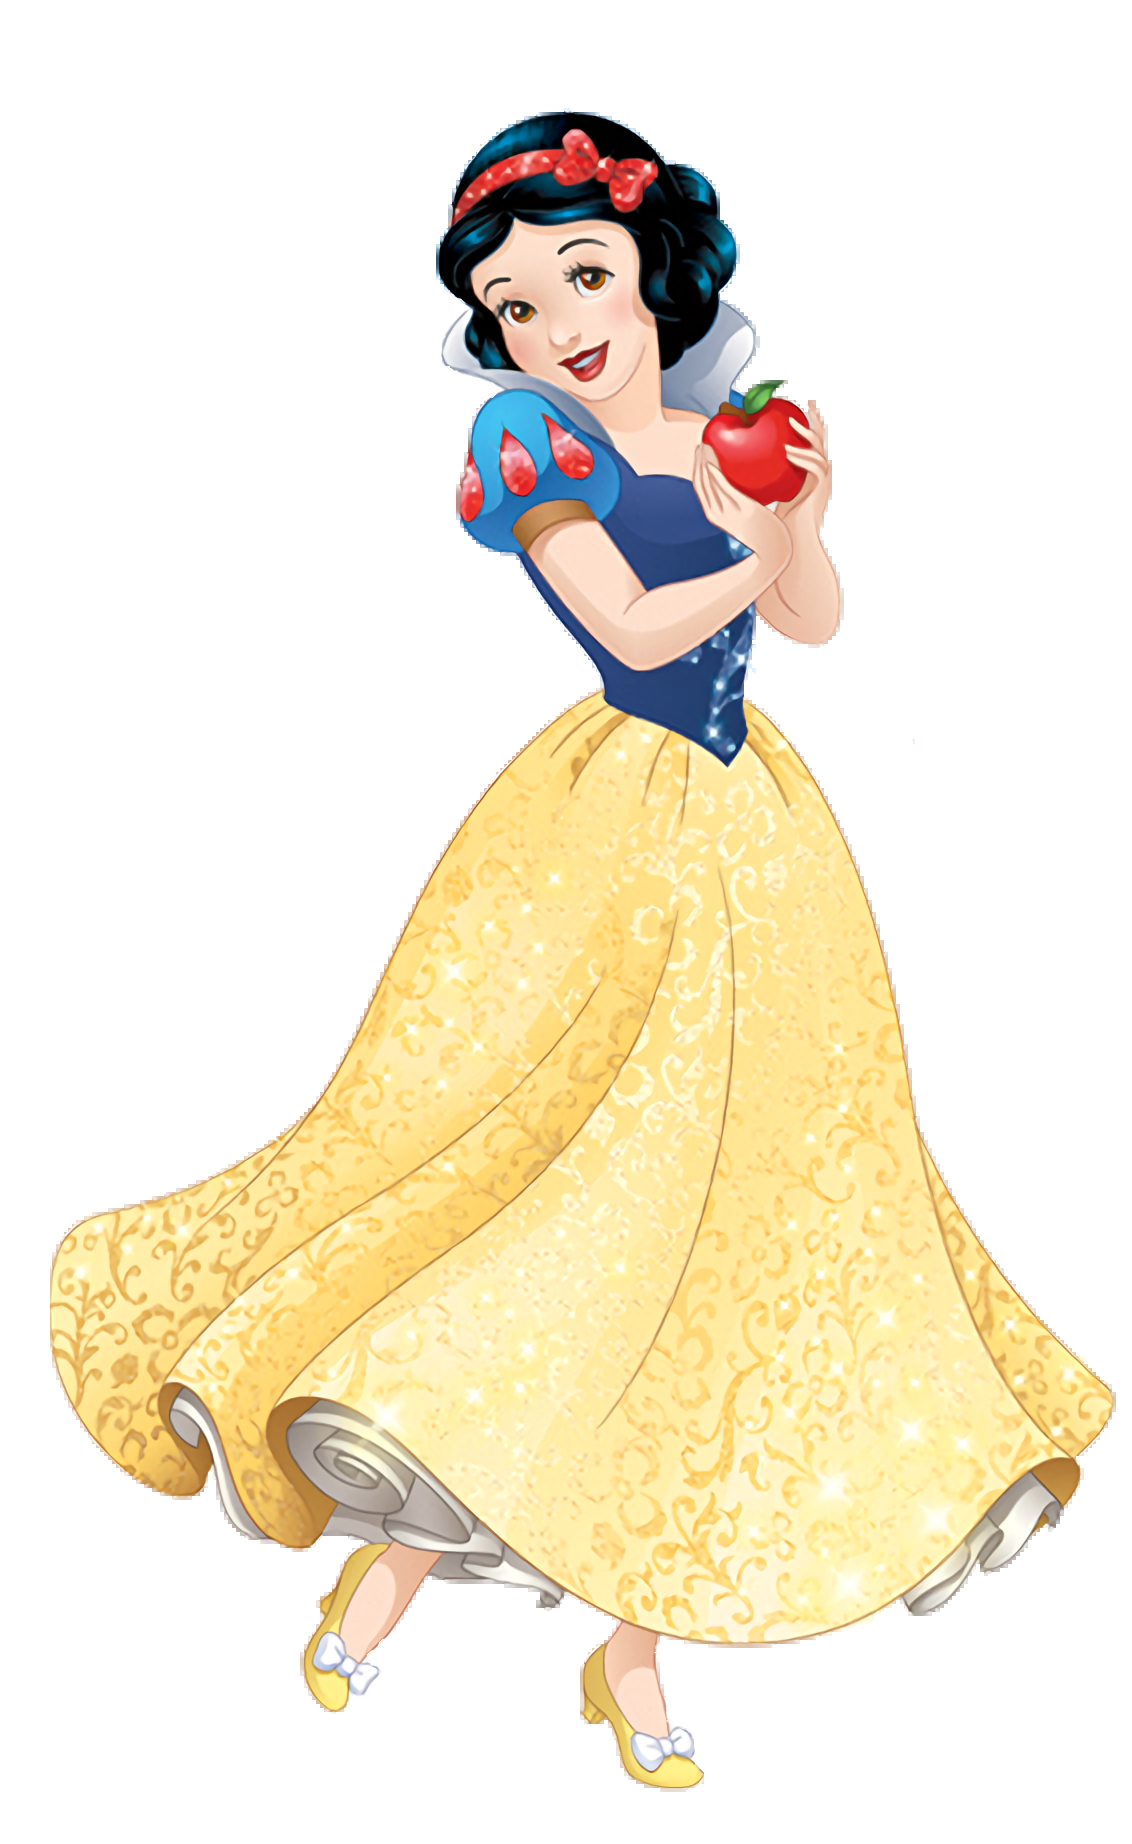 Snow White My Favorite Hero Concept Hero Wish List Disney Heroes Battle Mode 